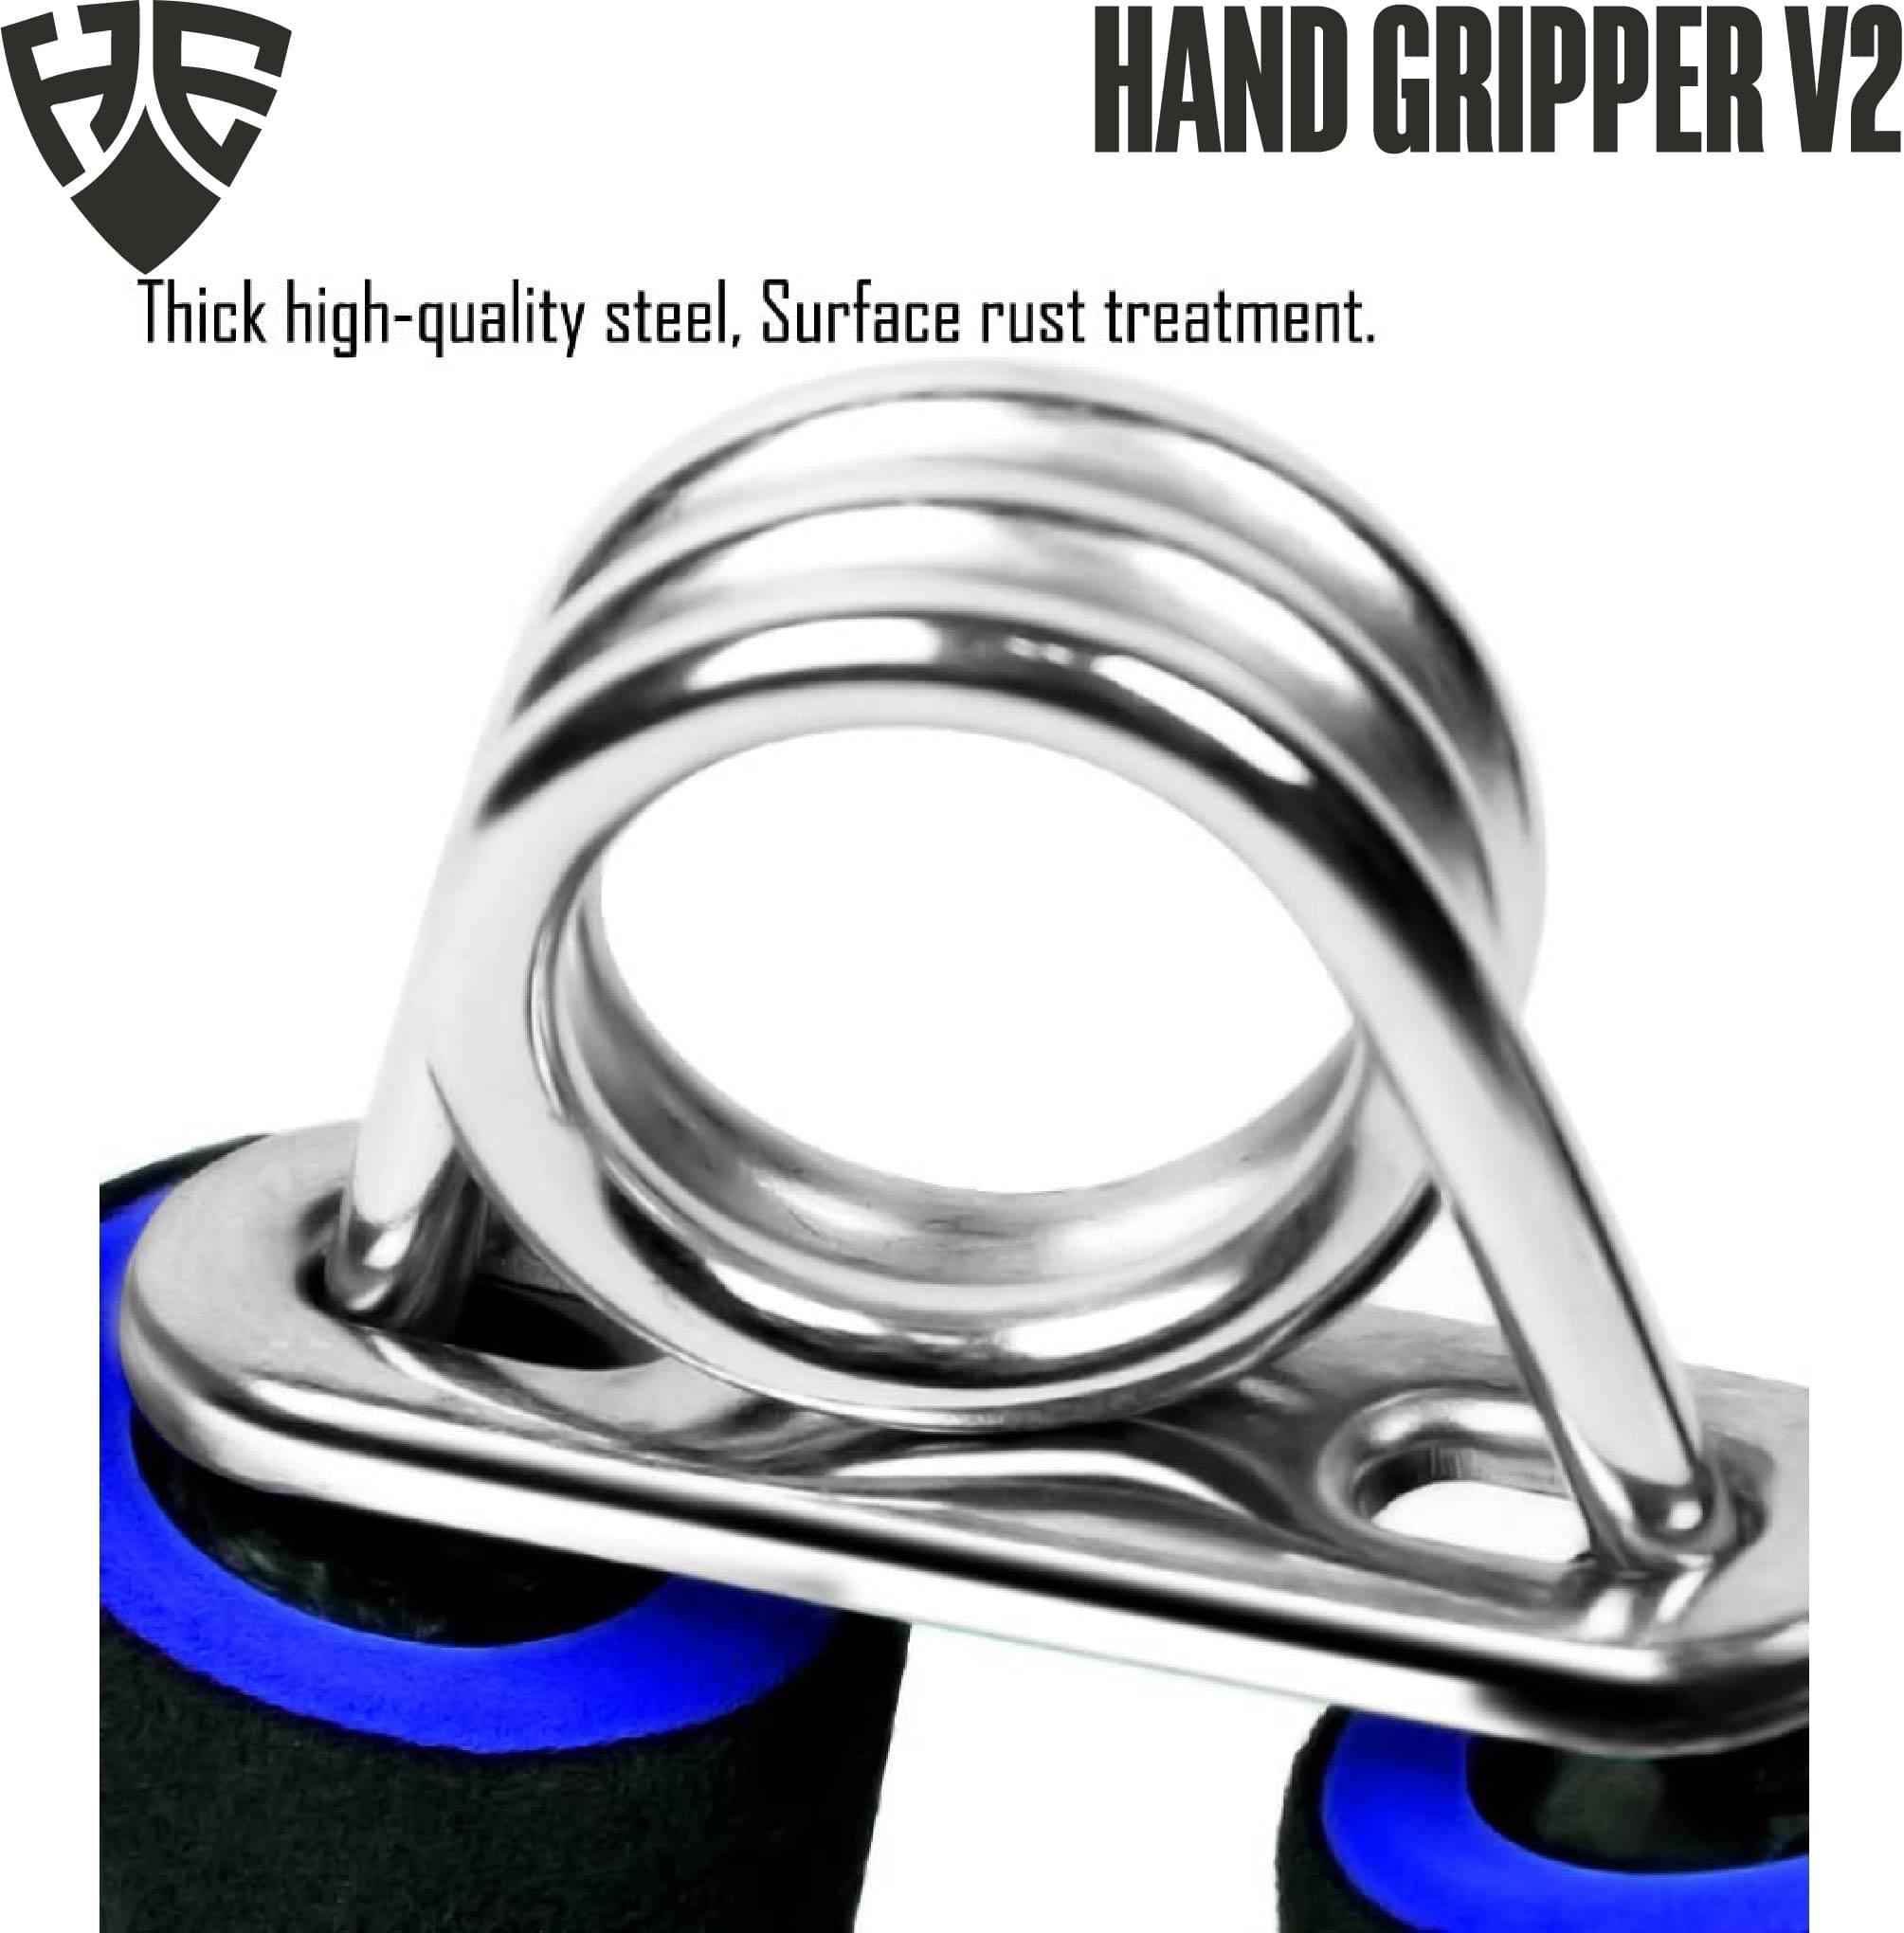 Manual Hand Grip Exerciser